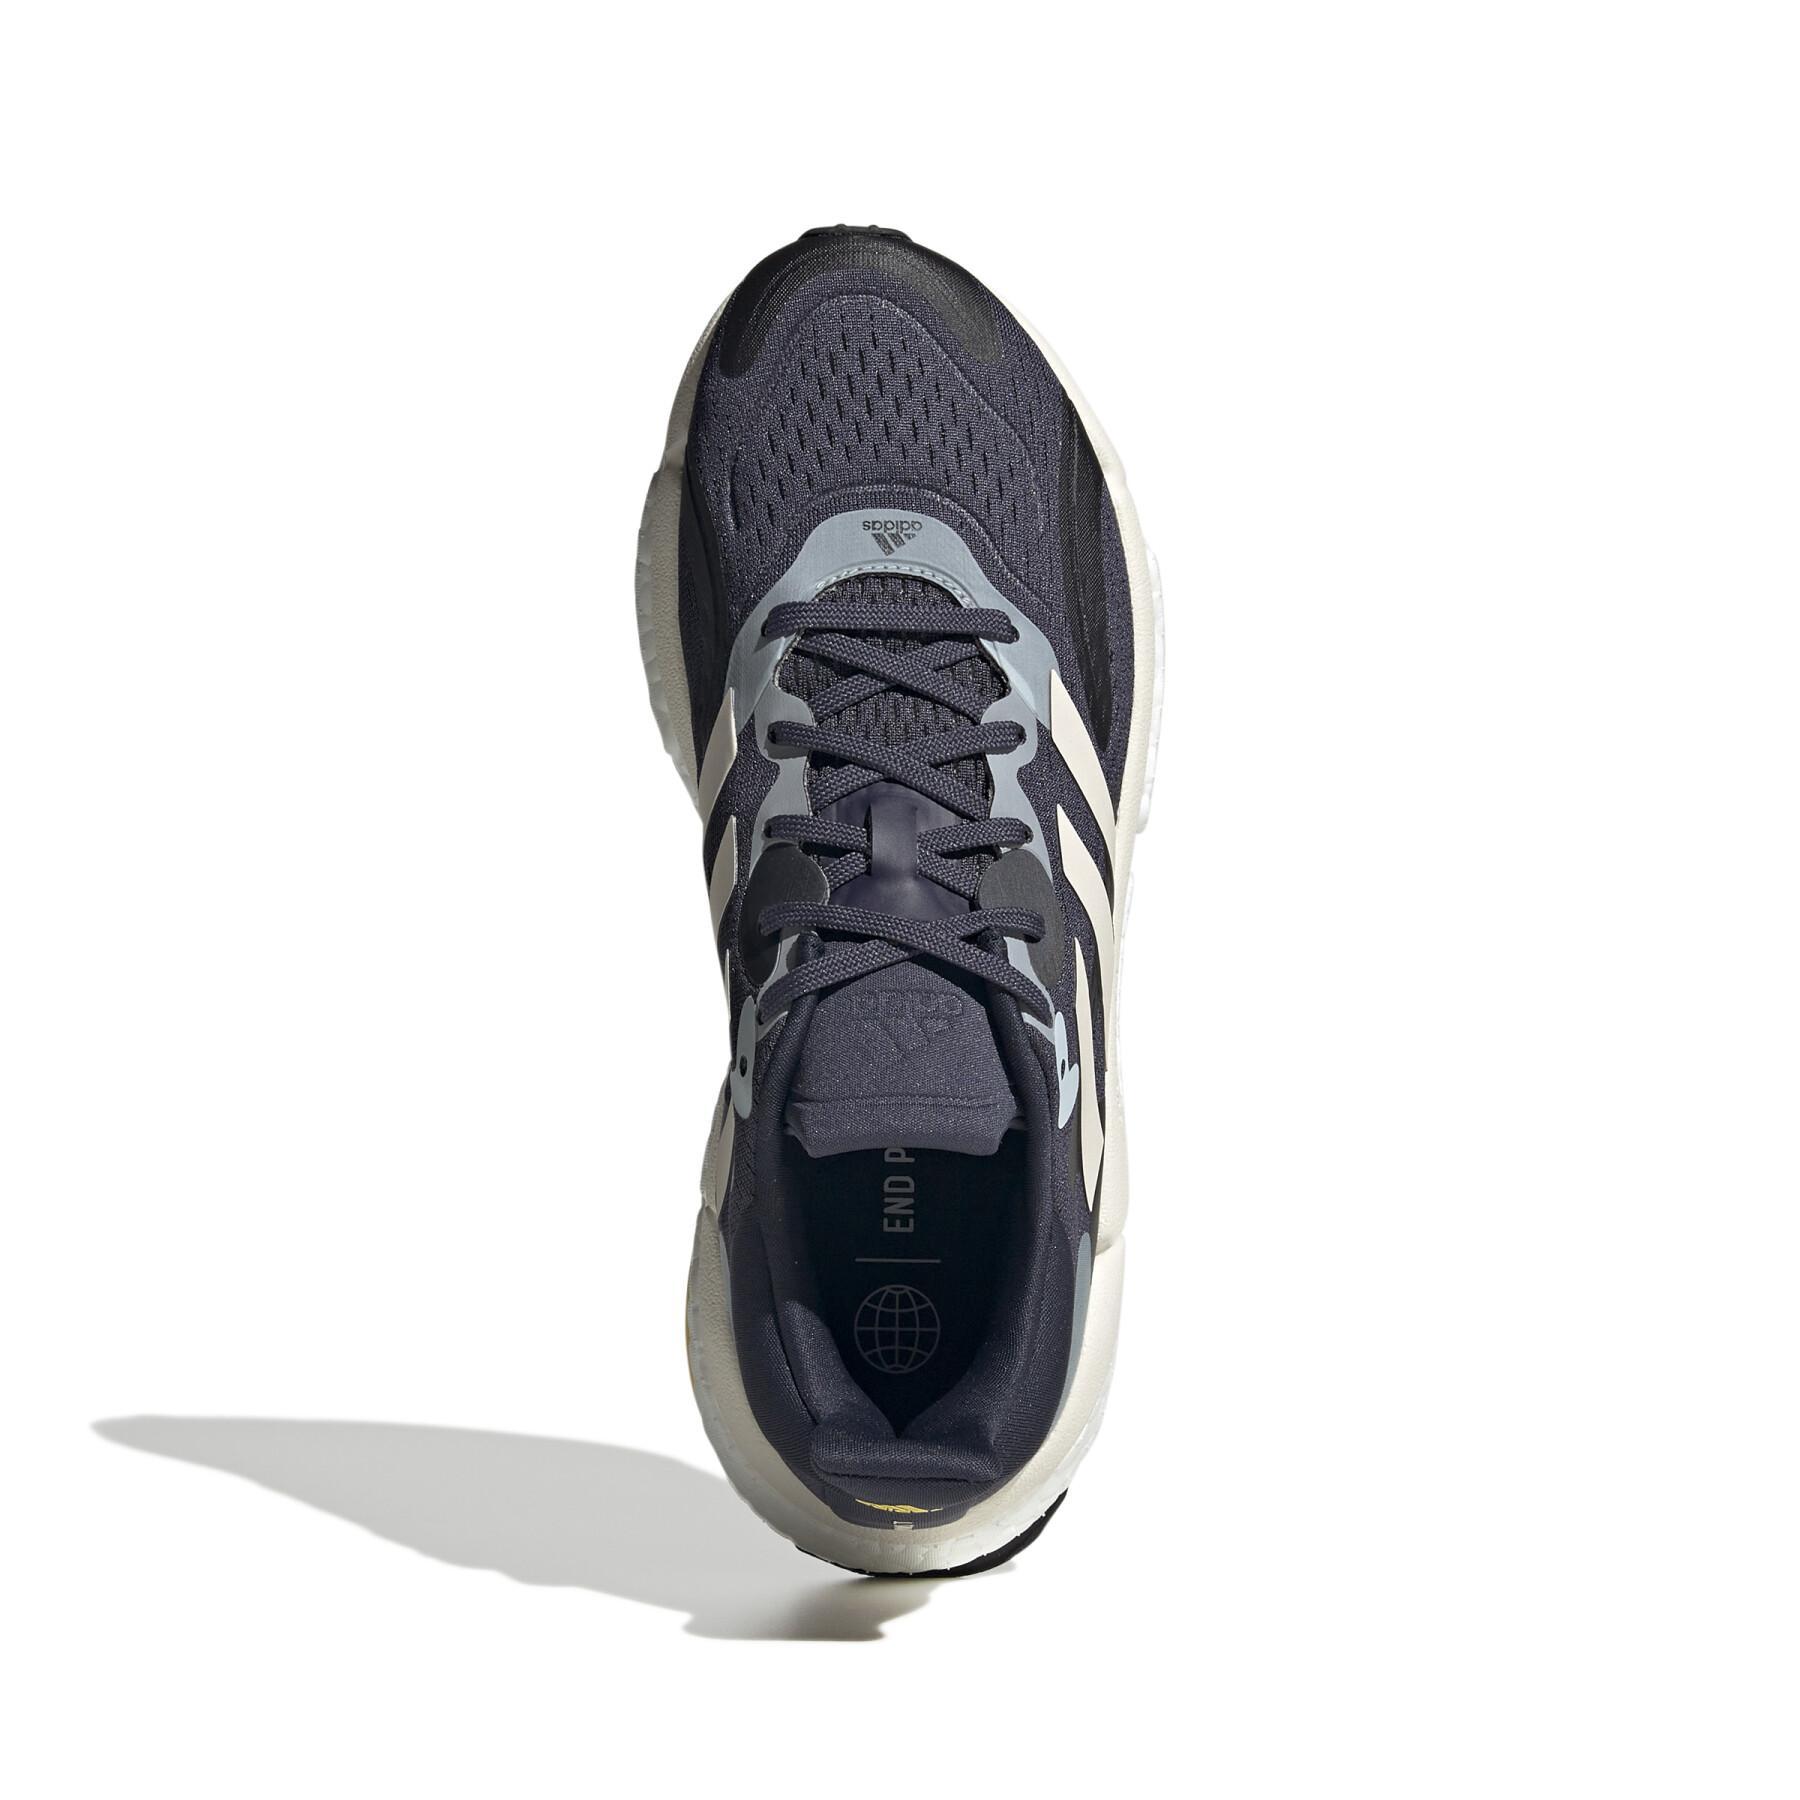 Solarboost 4 running shoe for women